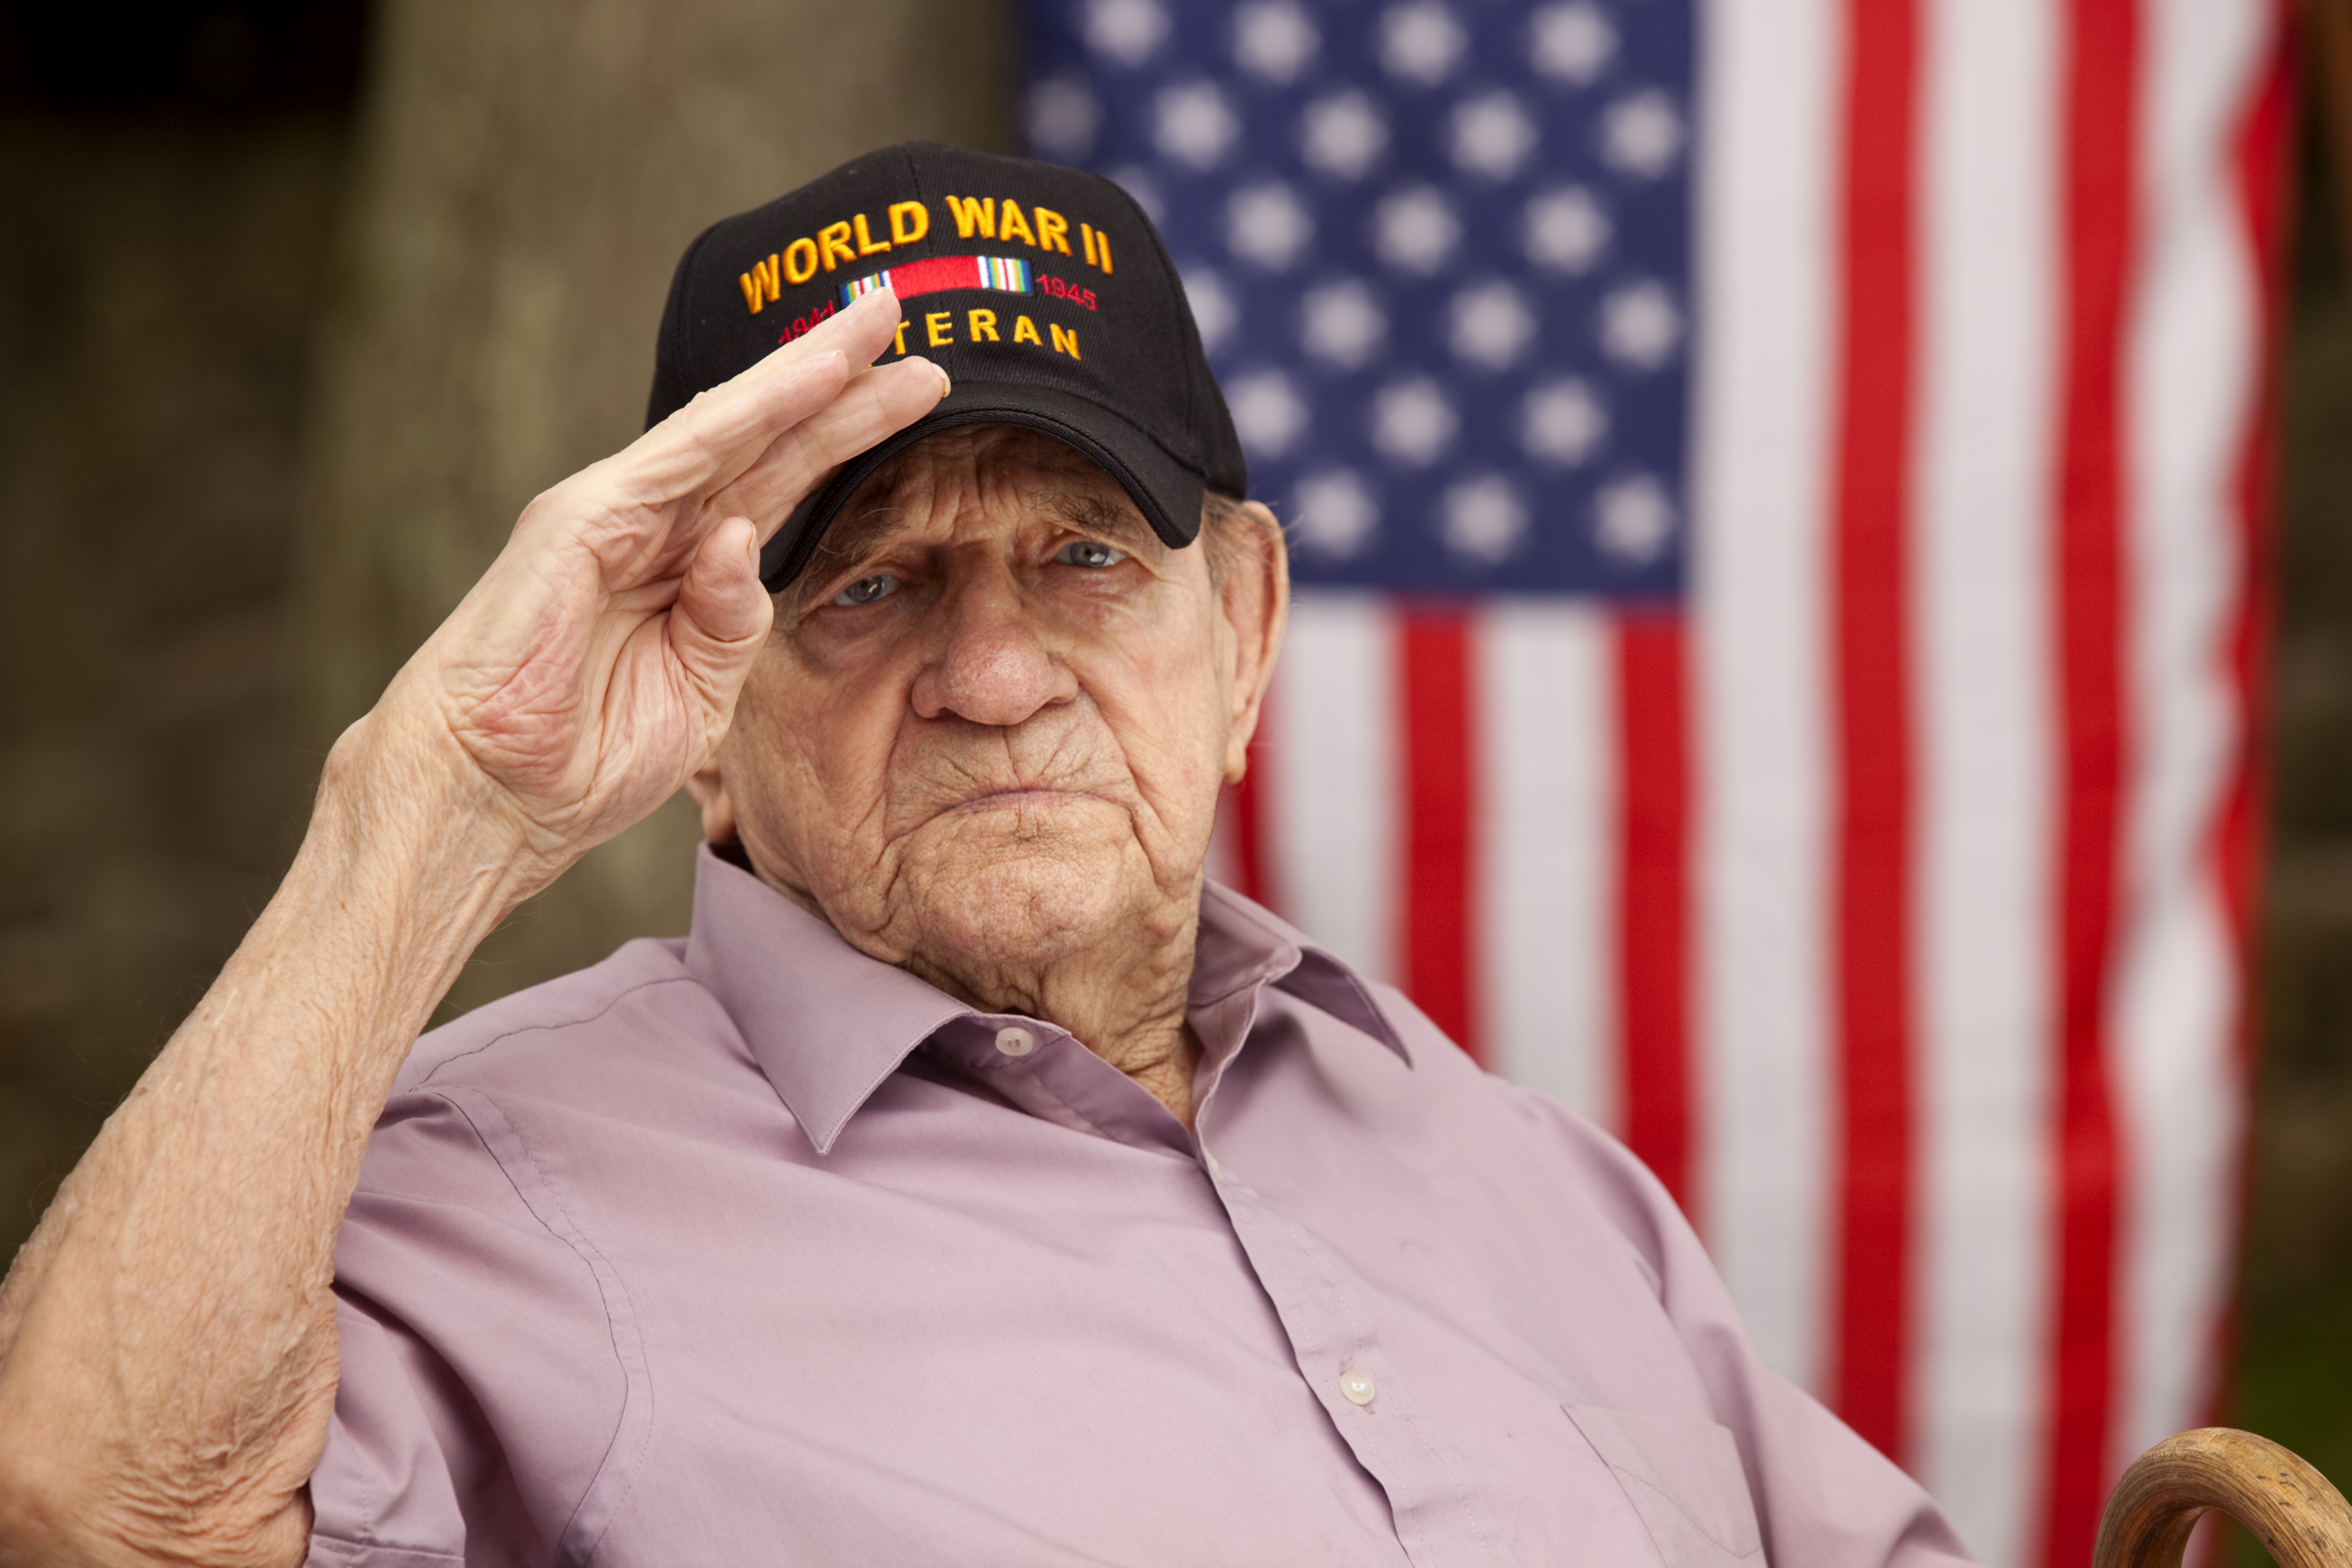 World War Two, Veteran wearing baseball cap with text, "World War Two Veteran". Saluting